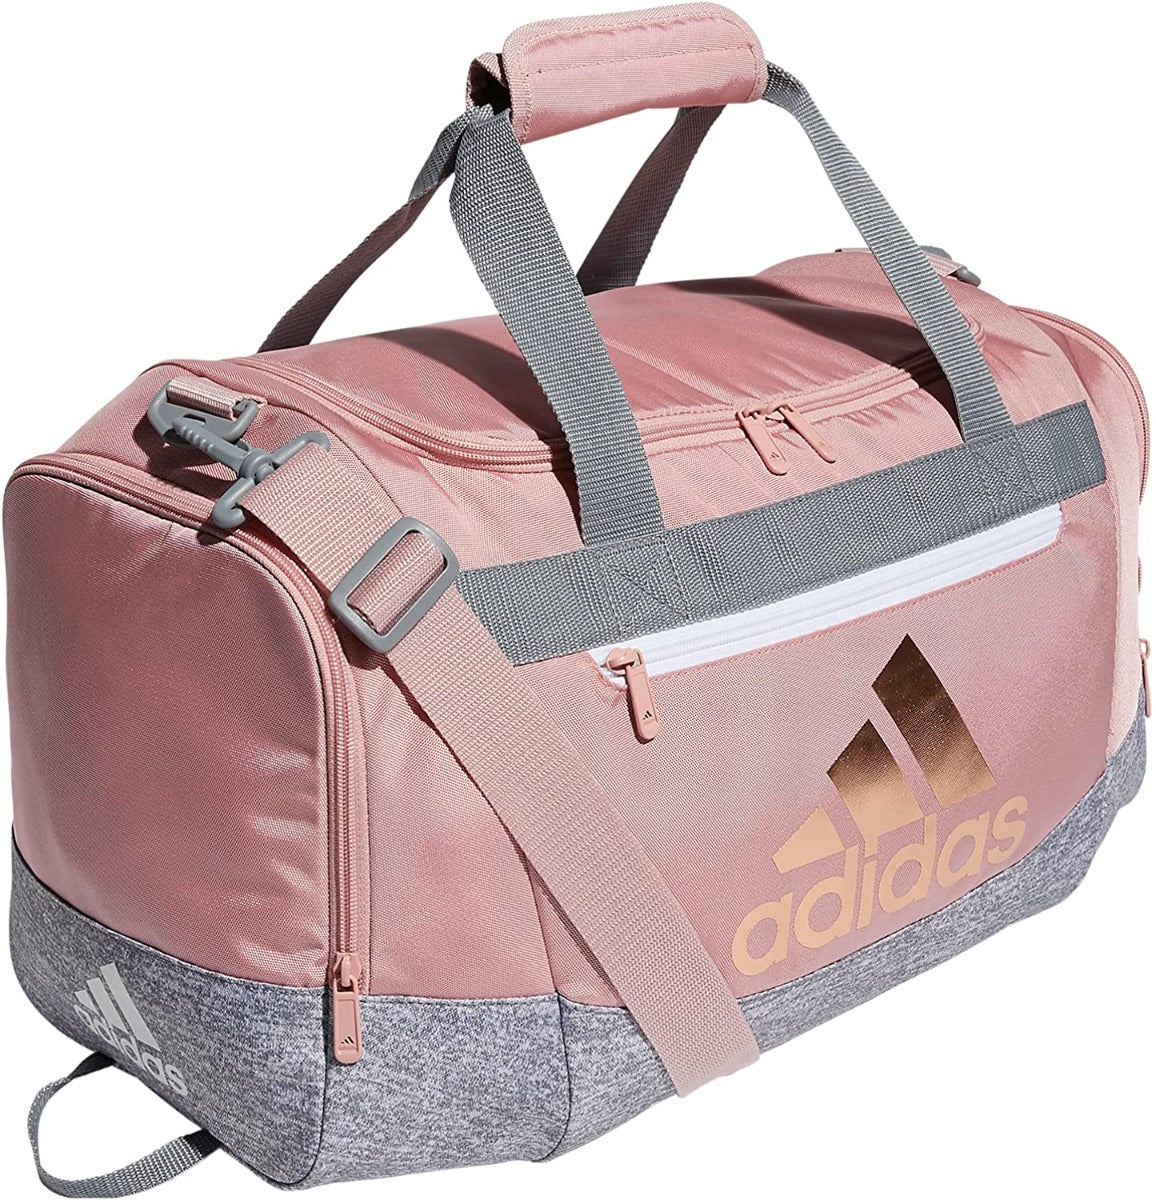 adidas Defender IV Small Duffel Bag - Mauve Pink-Jersey Grey (Top)